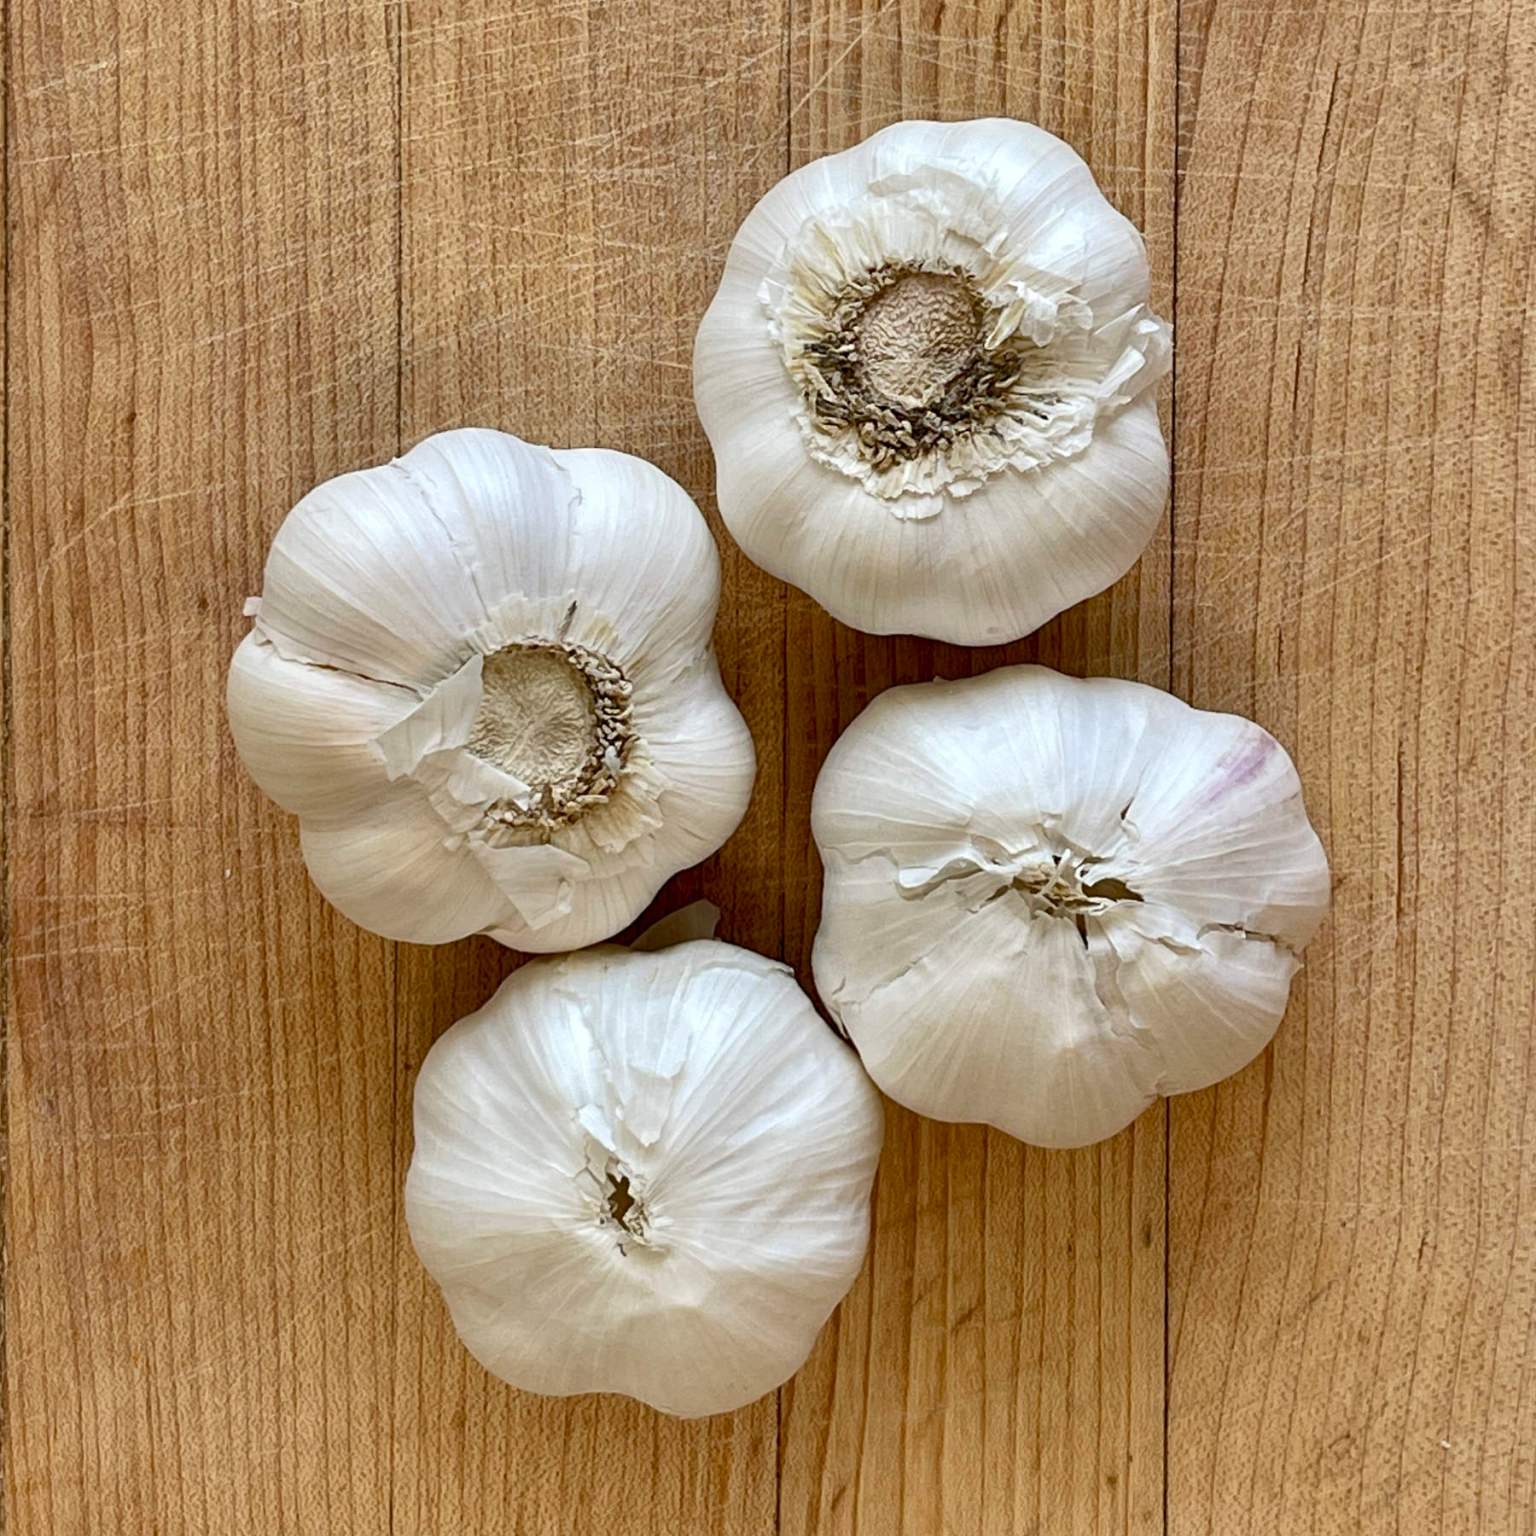 Four heads of garlic sit on a wooden cutting board